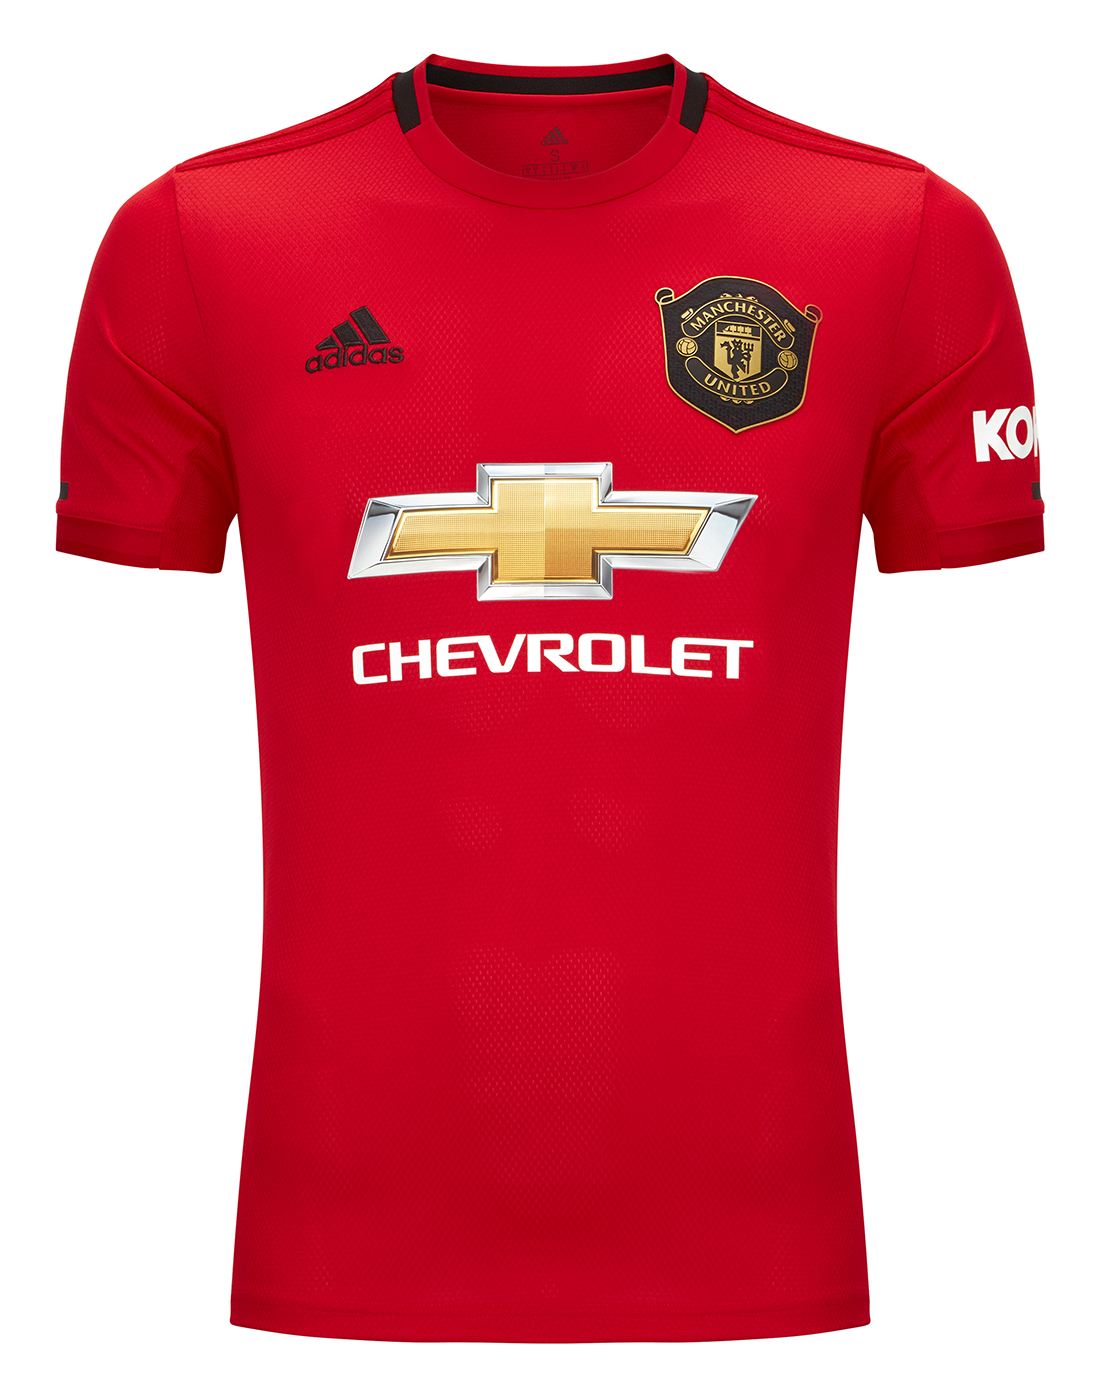 buy man united jersey